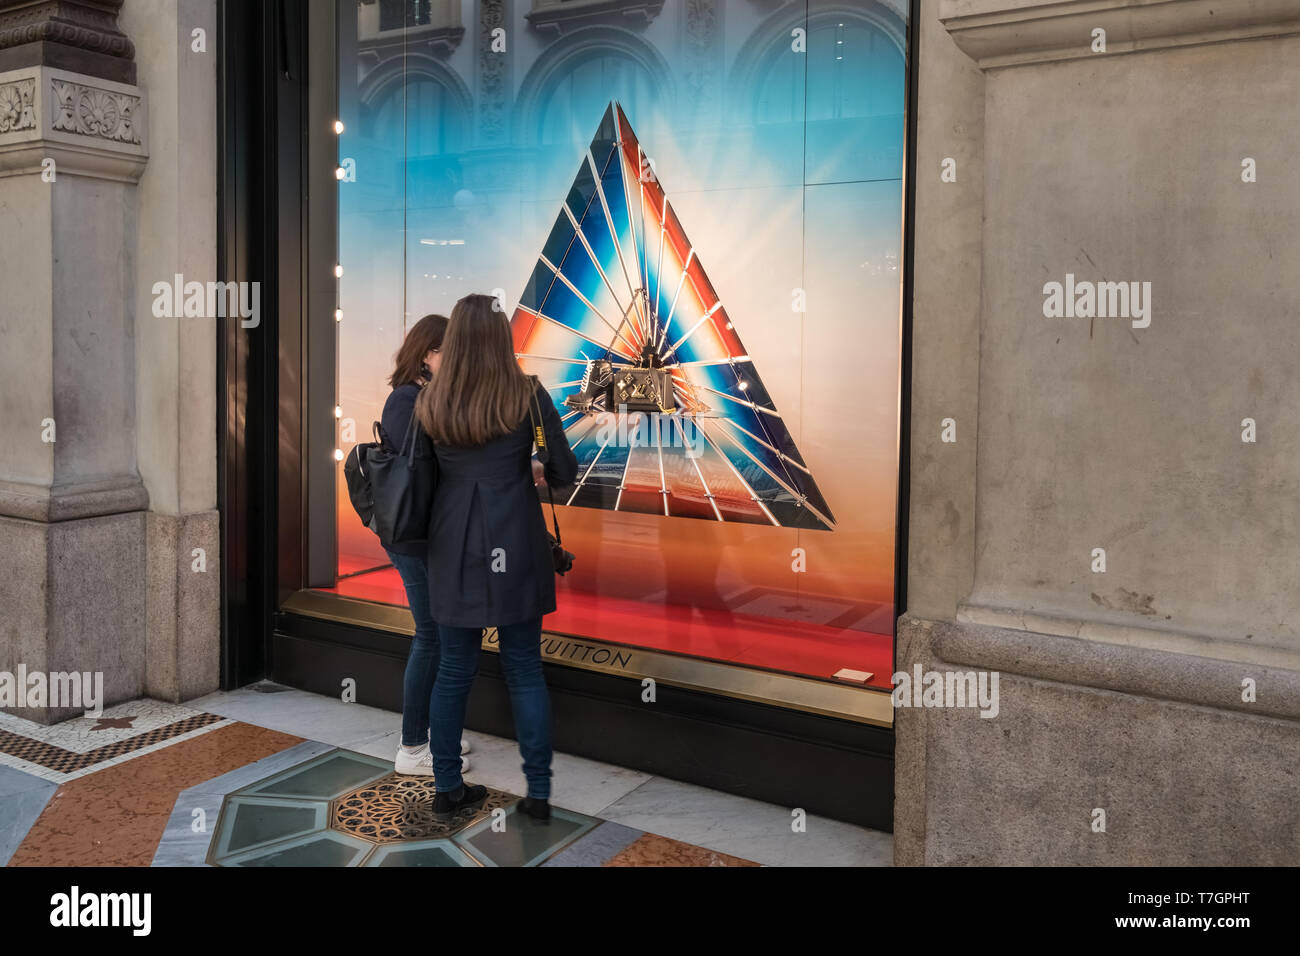 Galleria Vittorio Emanuele II shopping arcade, Milan, Italy, two women looking at luxury high end fashion brand Louis Vuitton designs in shop window. Stock Photo